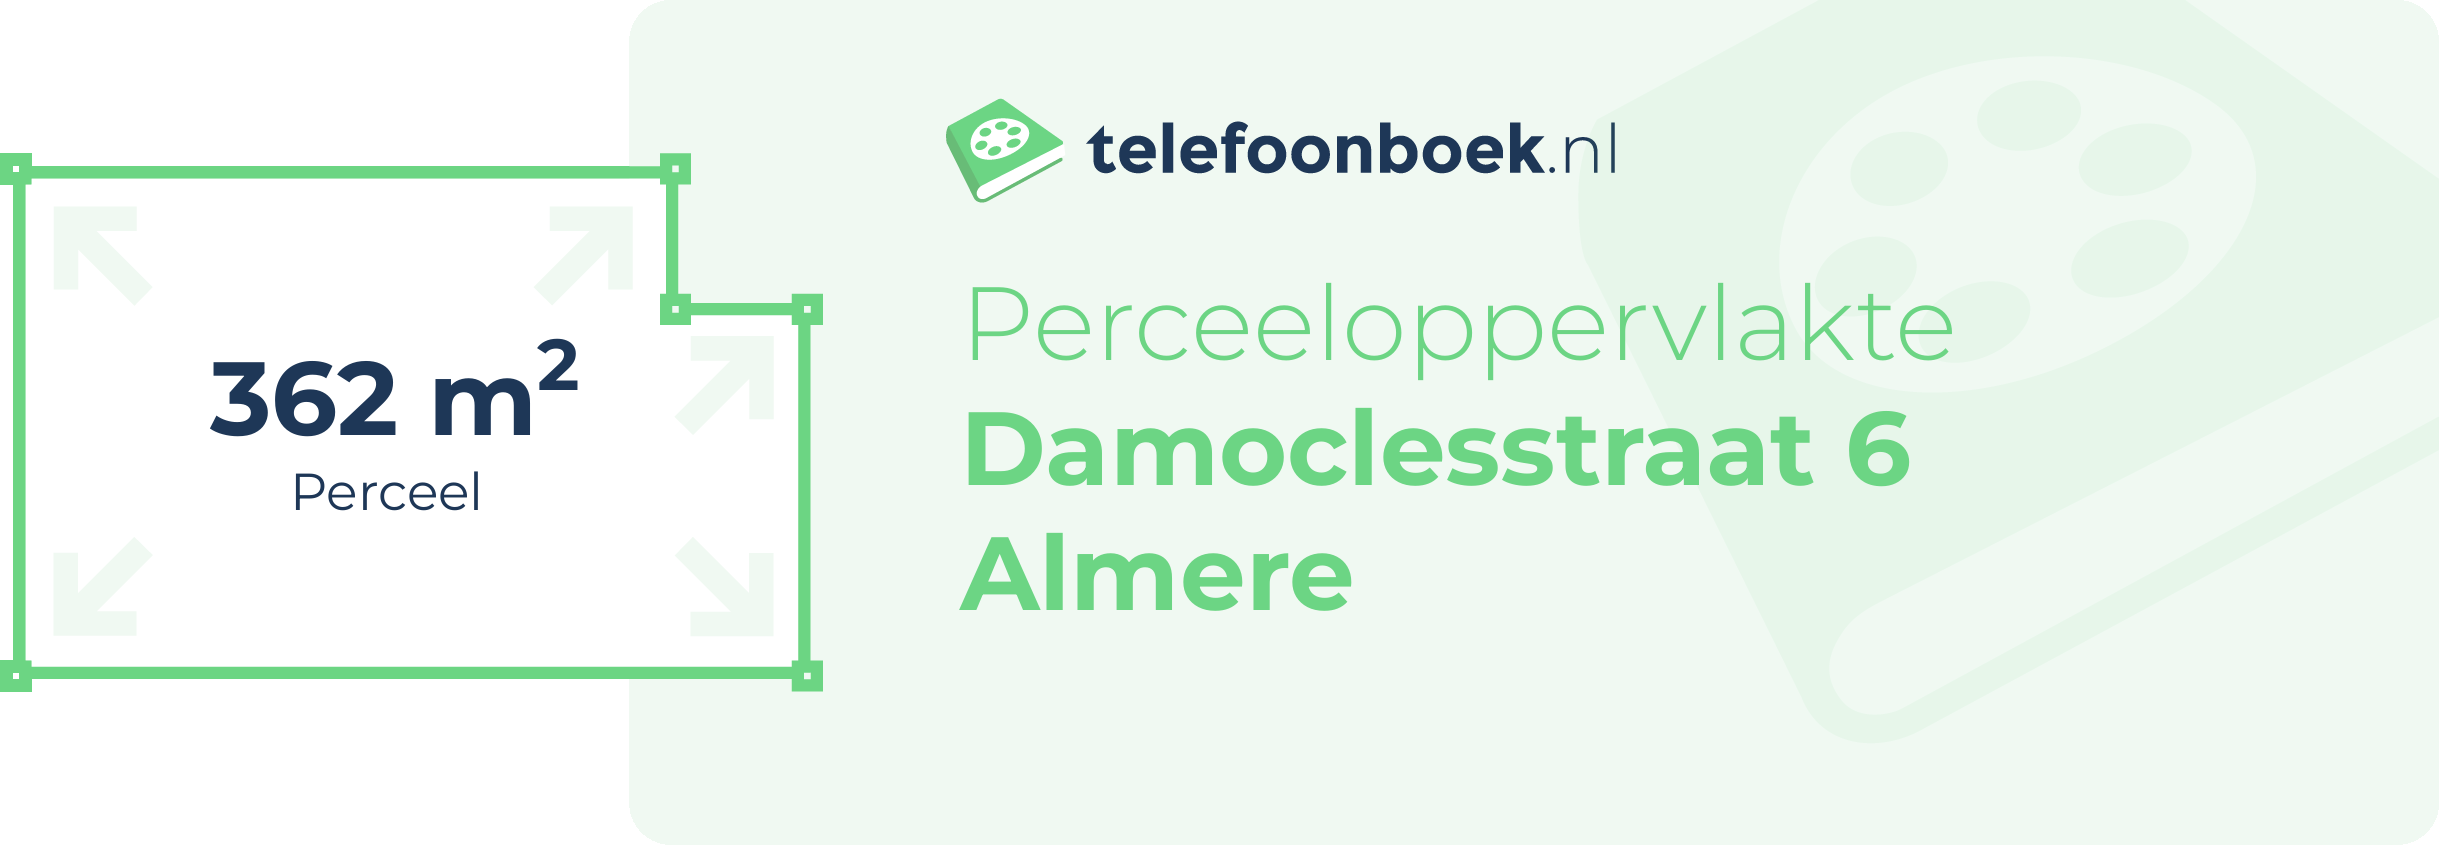 Perceeloppervlakte Damoclesstraat 6 Almere